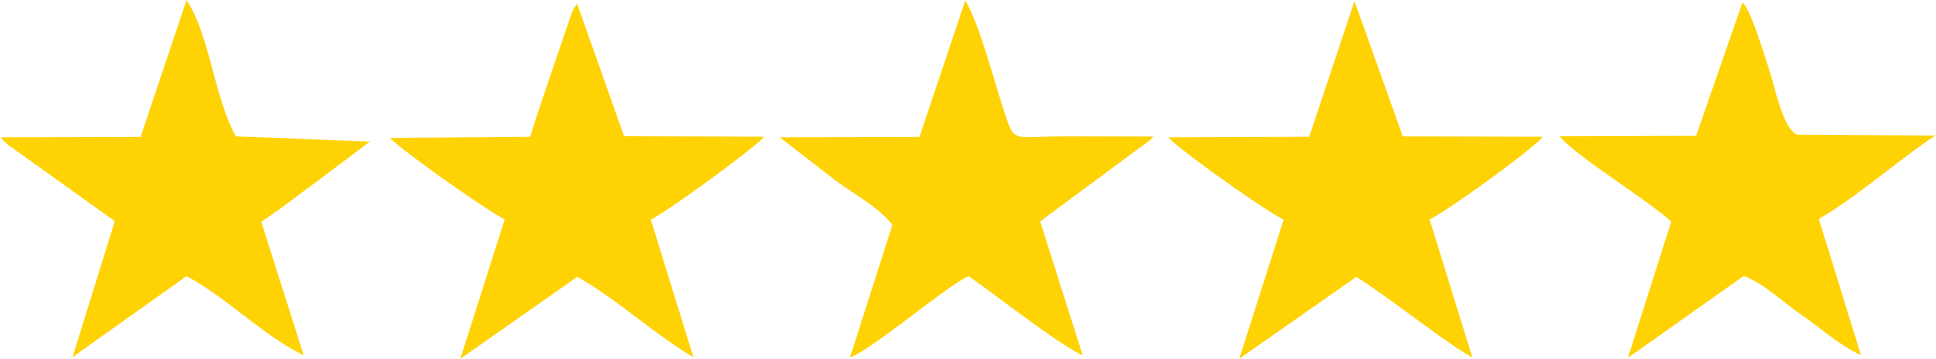 5 star